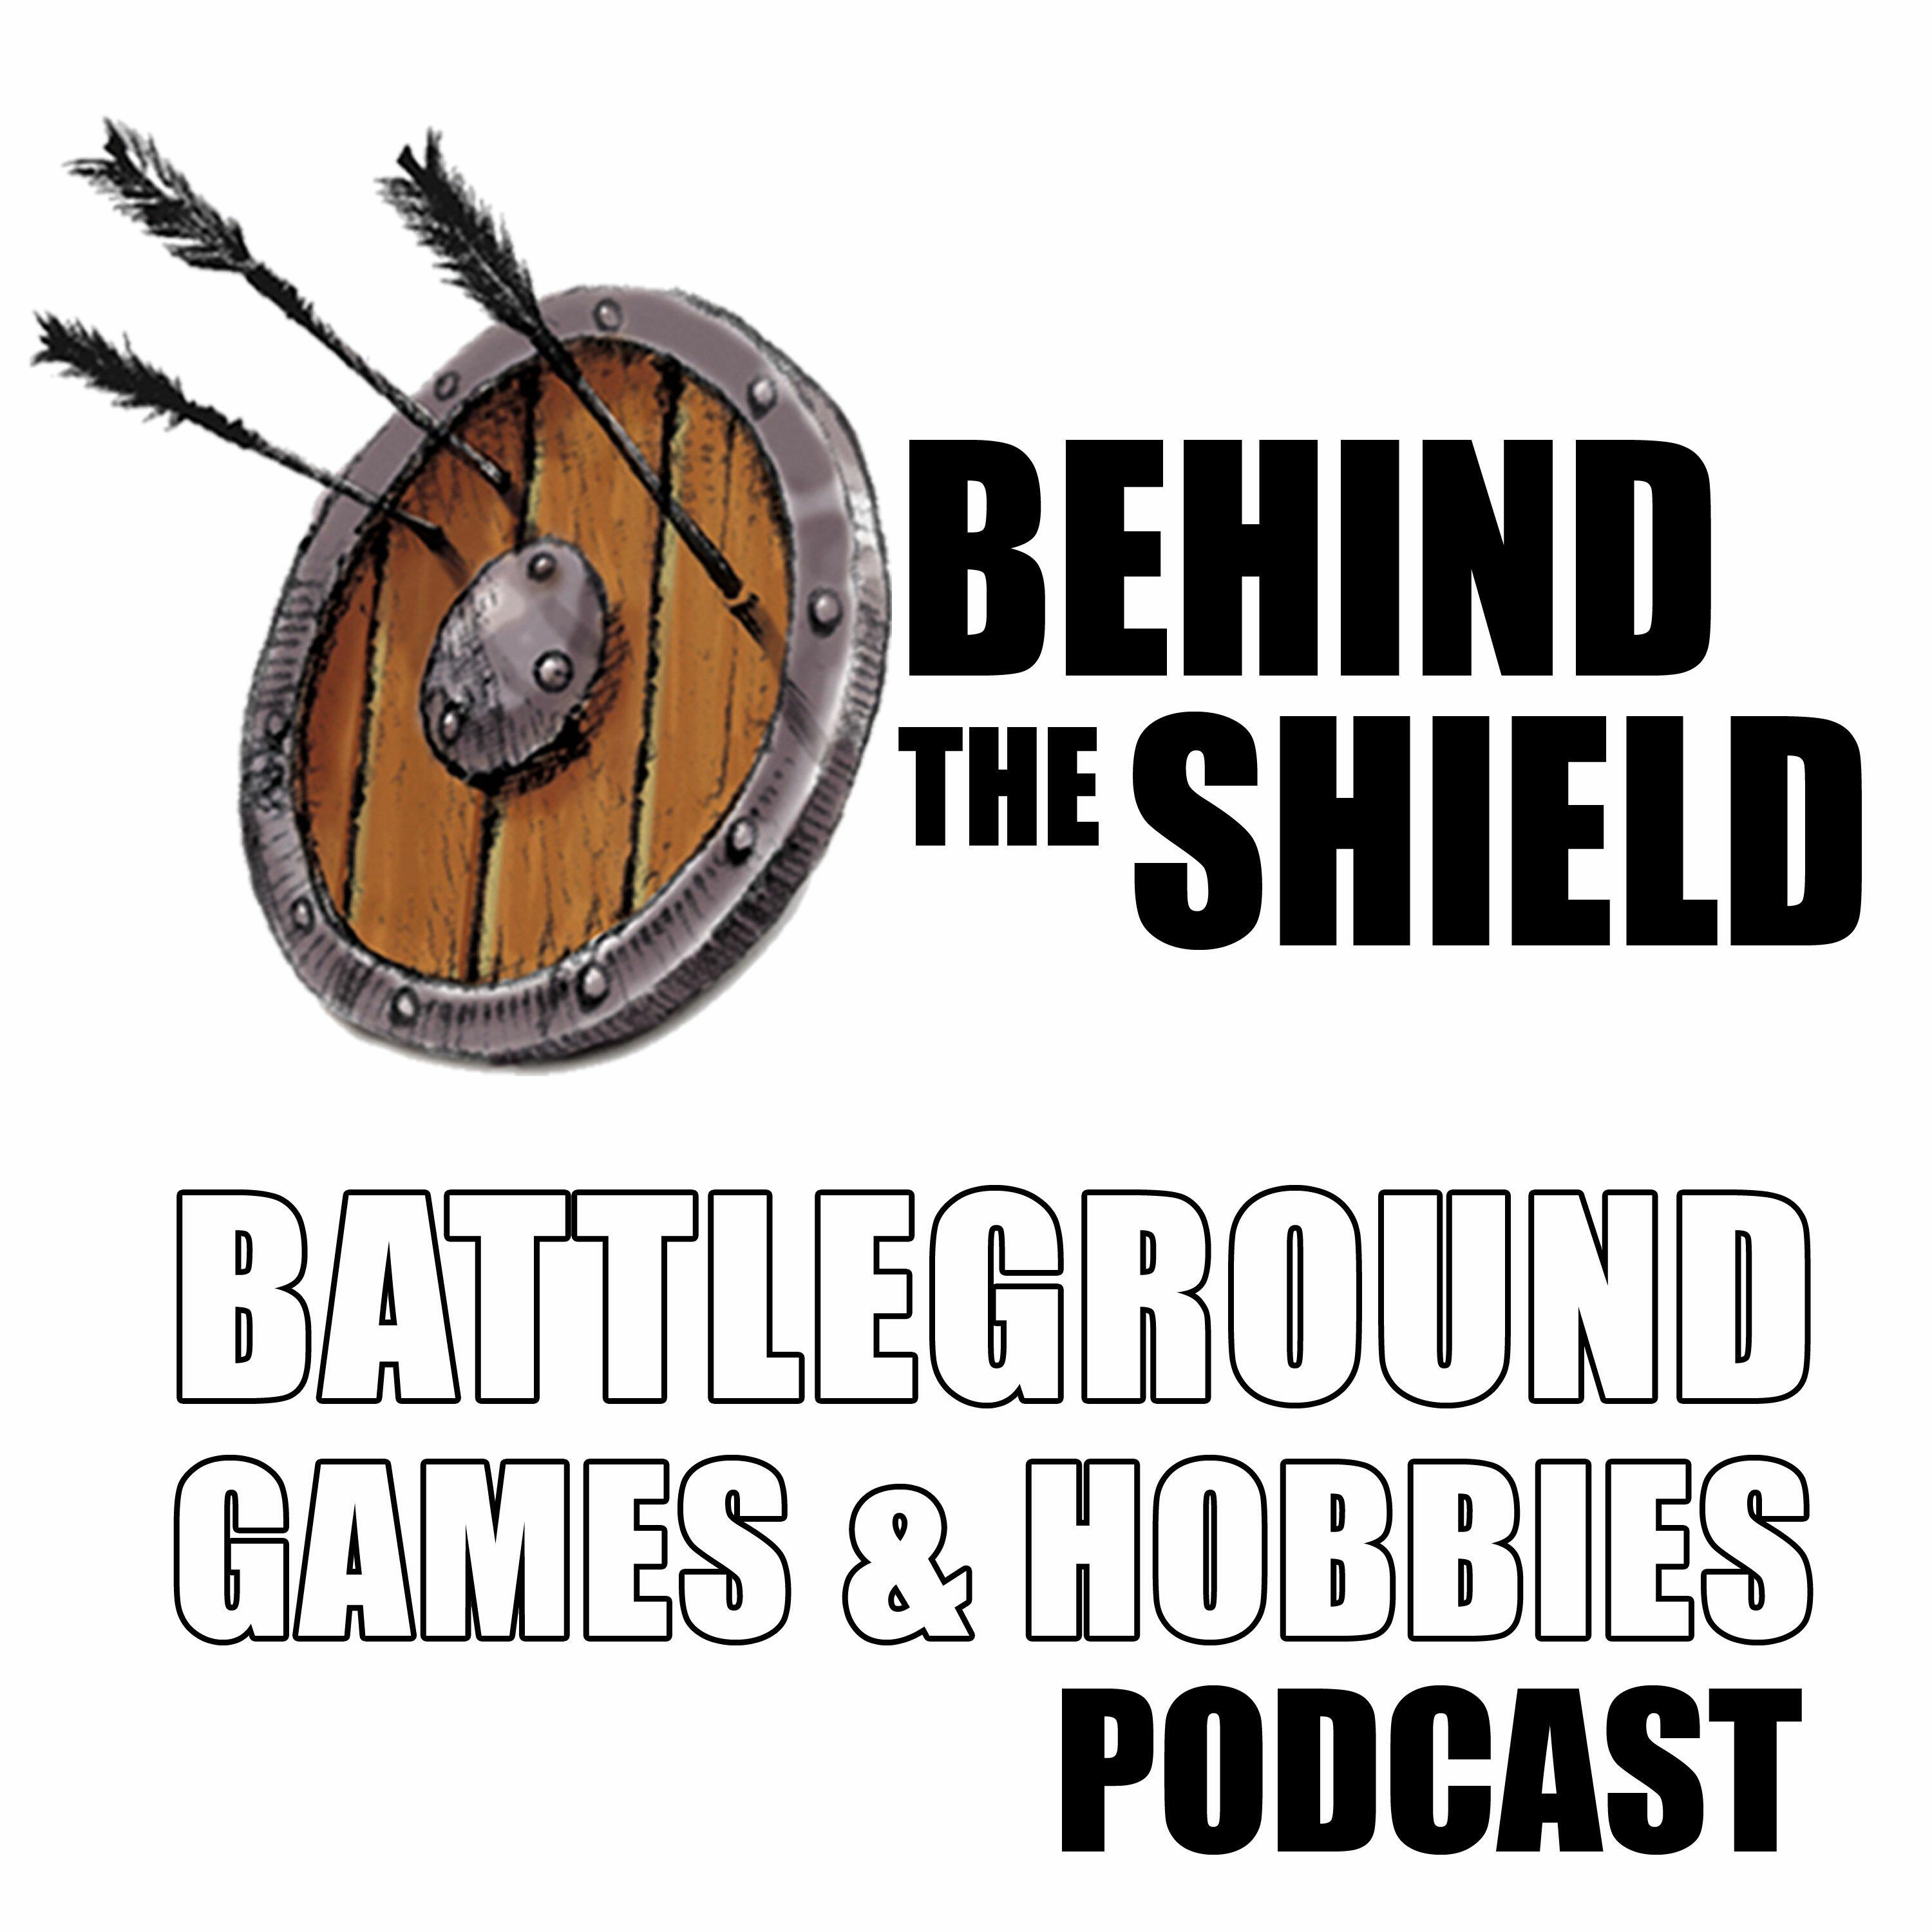 battleground games & hobbies